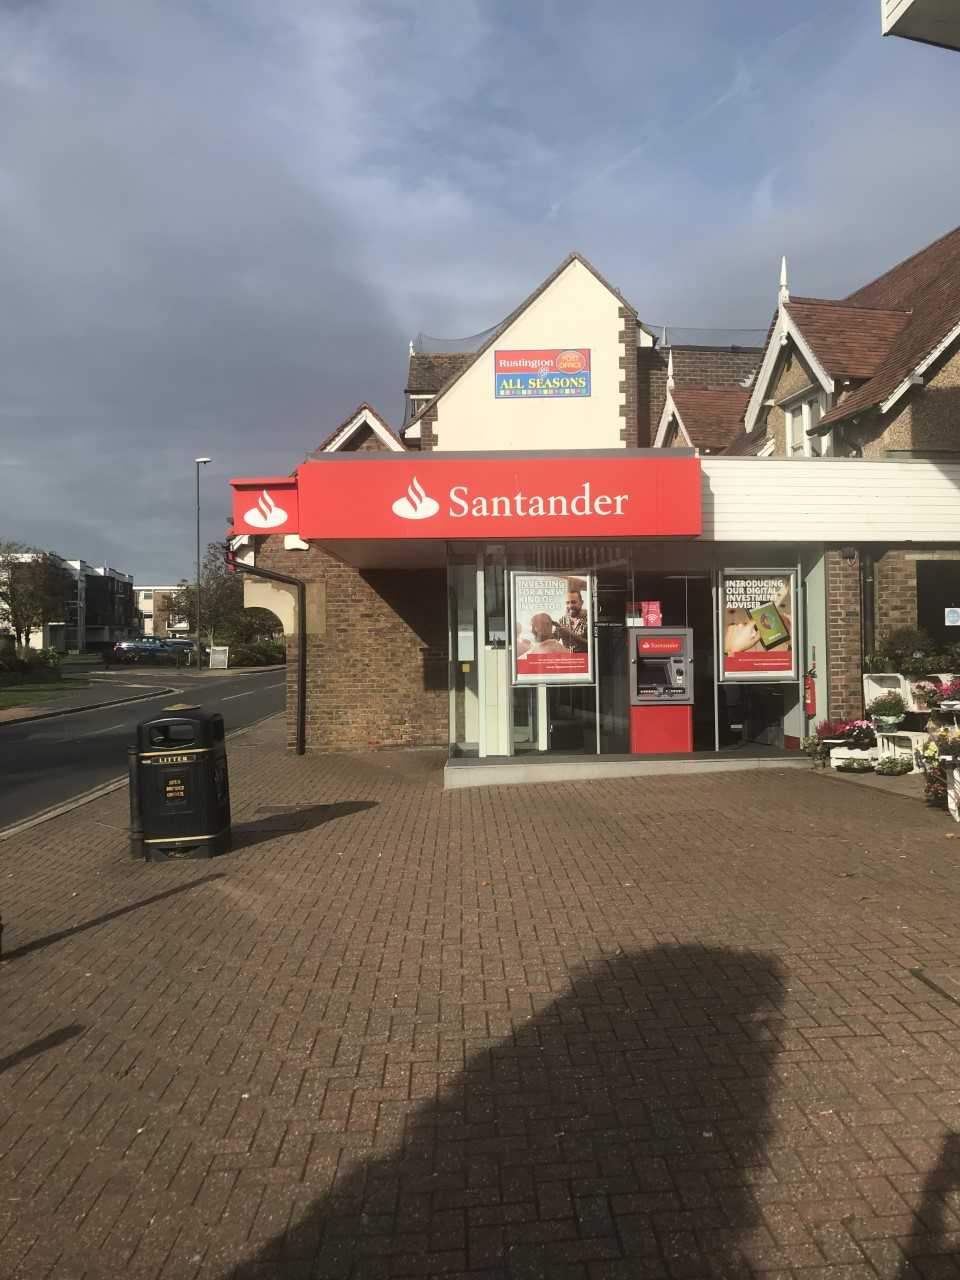 Santander in Rustington